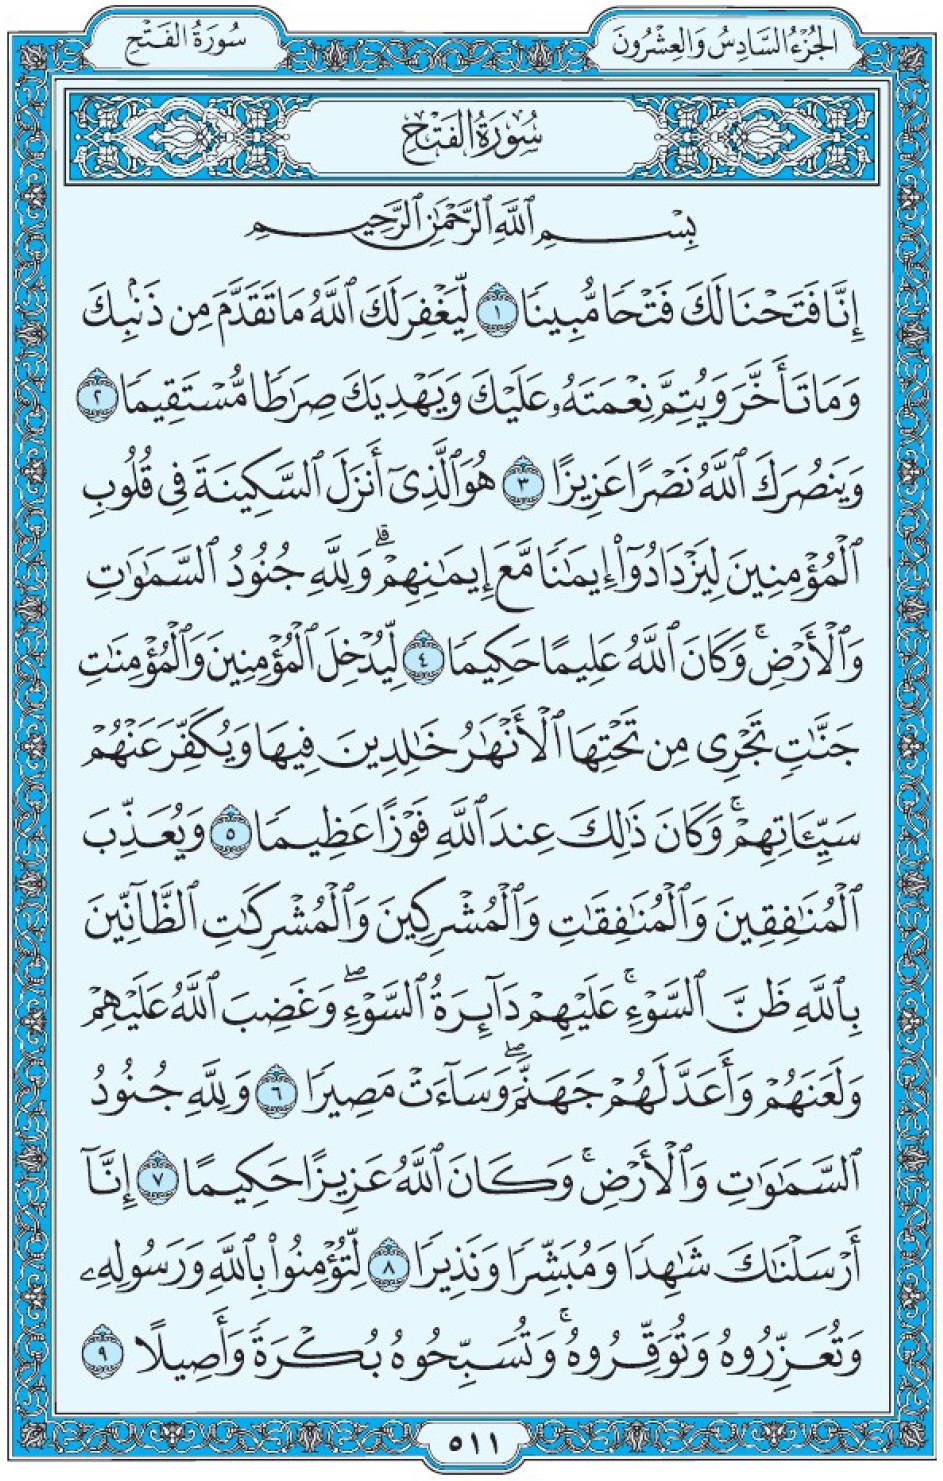 Коран Мединский мусхаф страница 511, сура 48 аль-Фатх سورة ٤٨ الفتح 